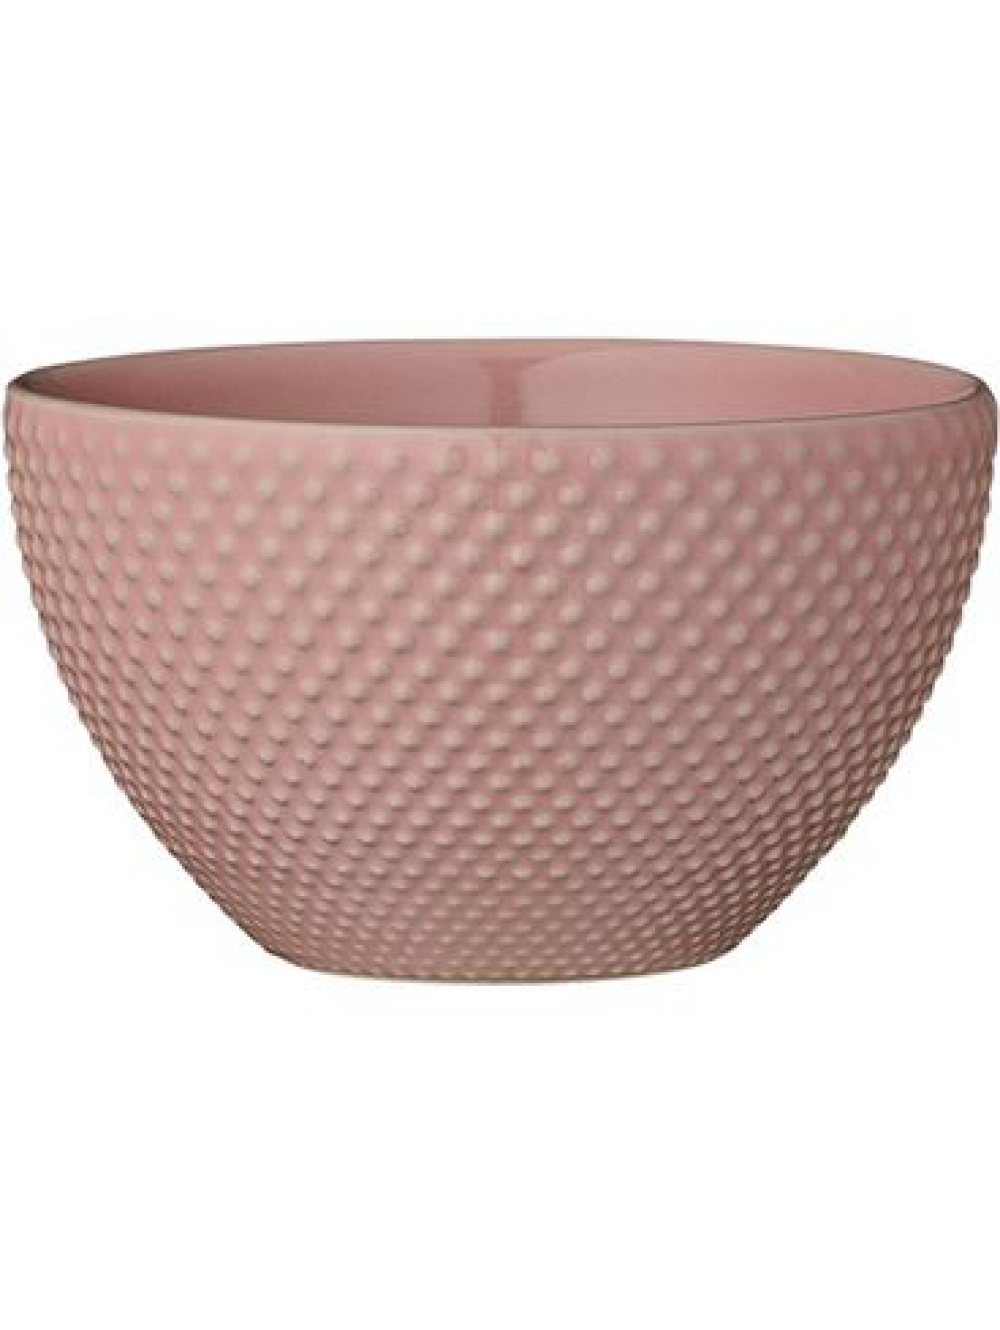 Raine Bowl -  Pink - Image 0